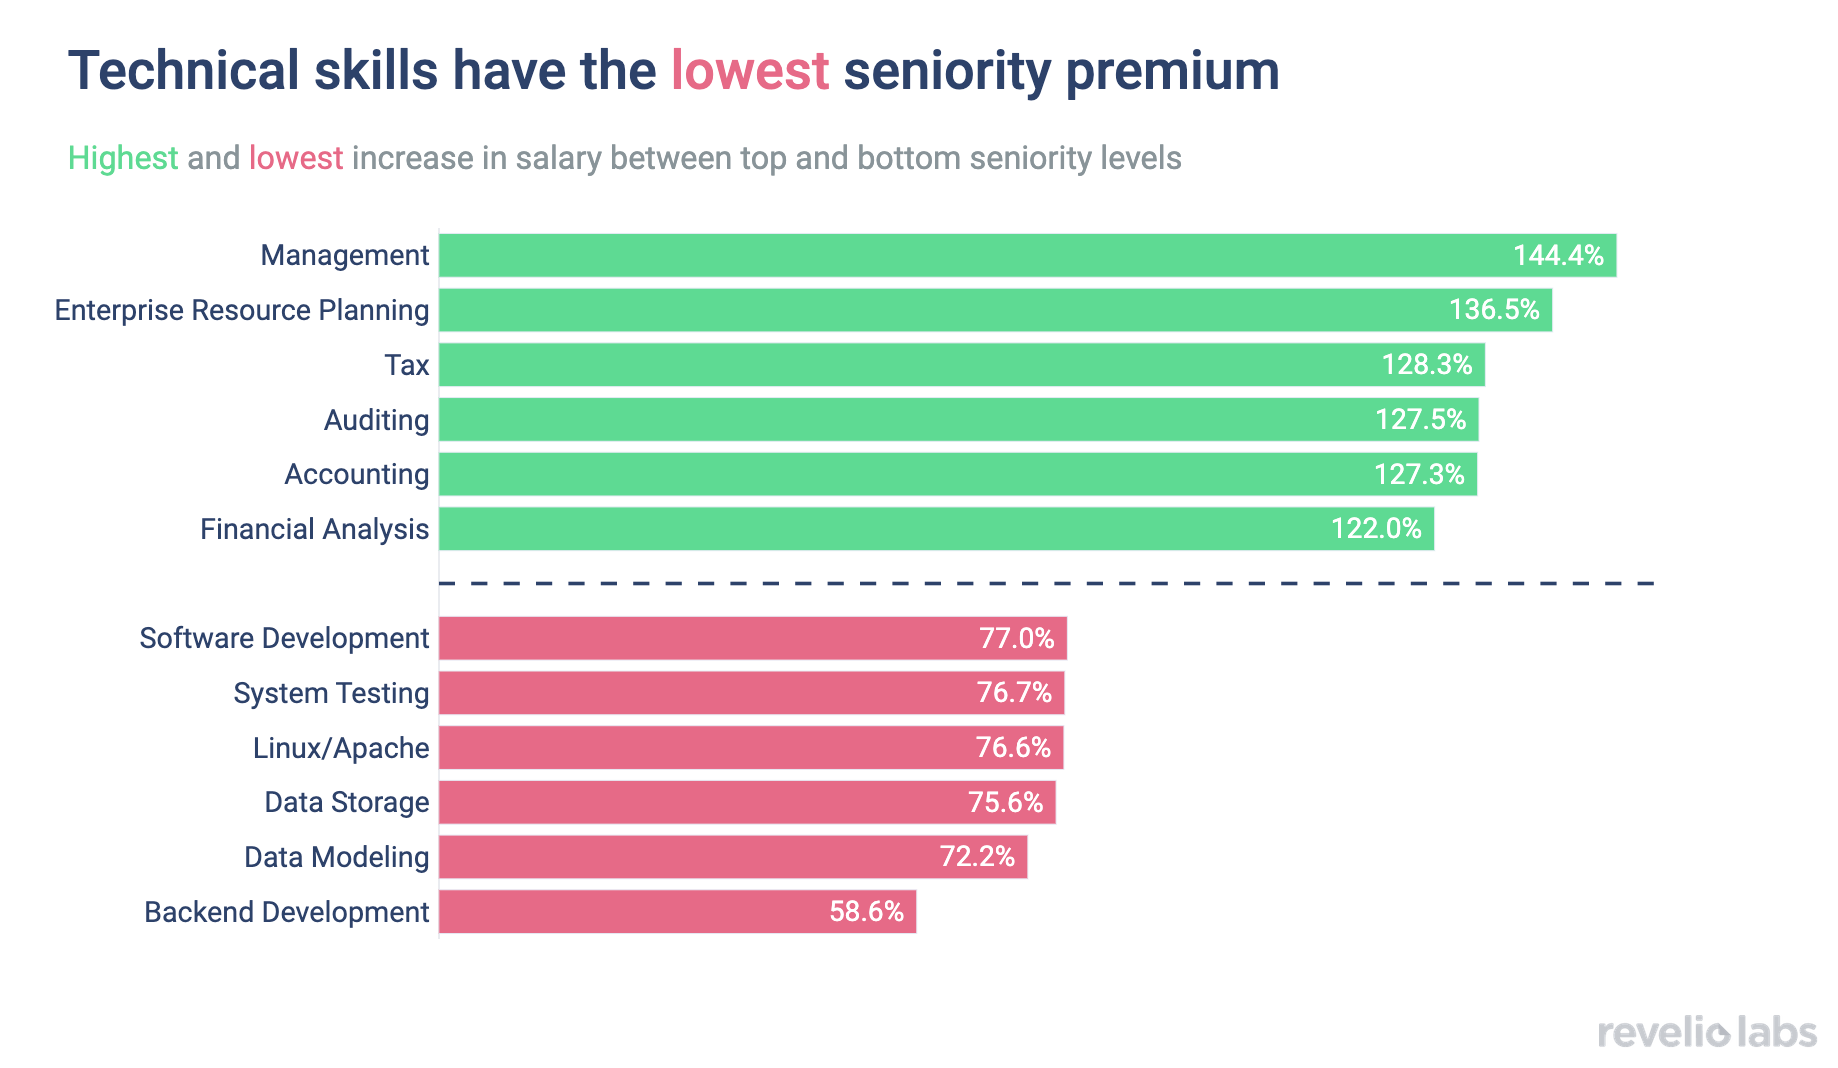 Technical skills have the lowest seniority premium